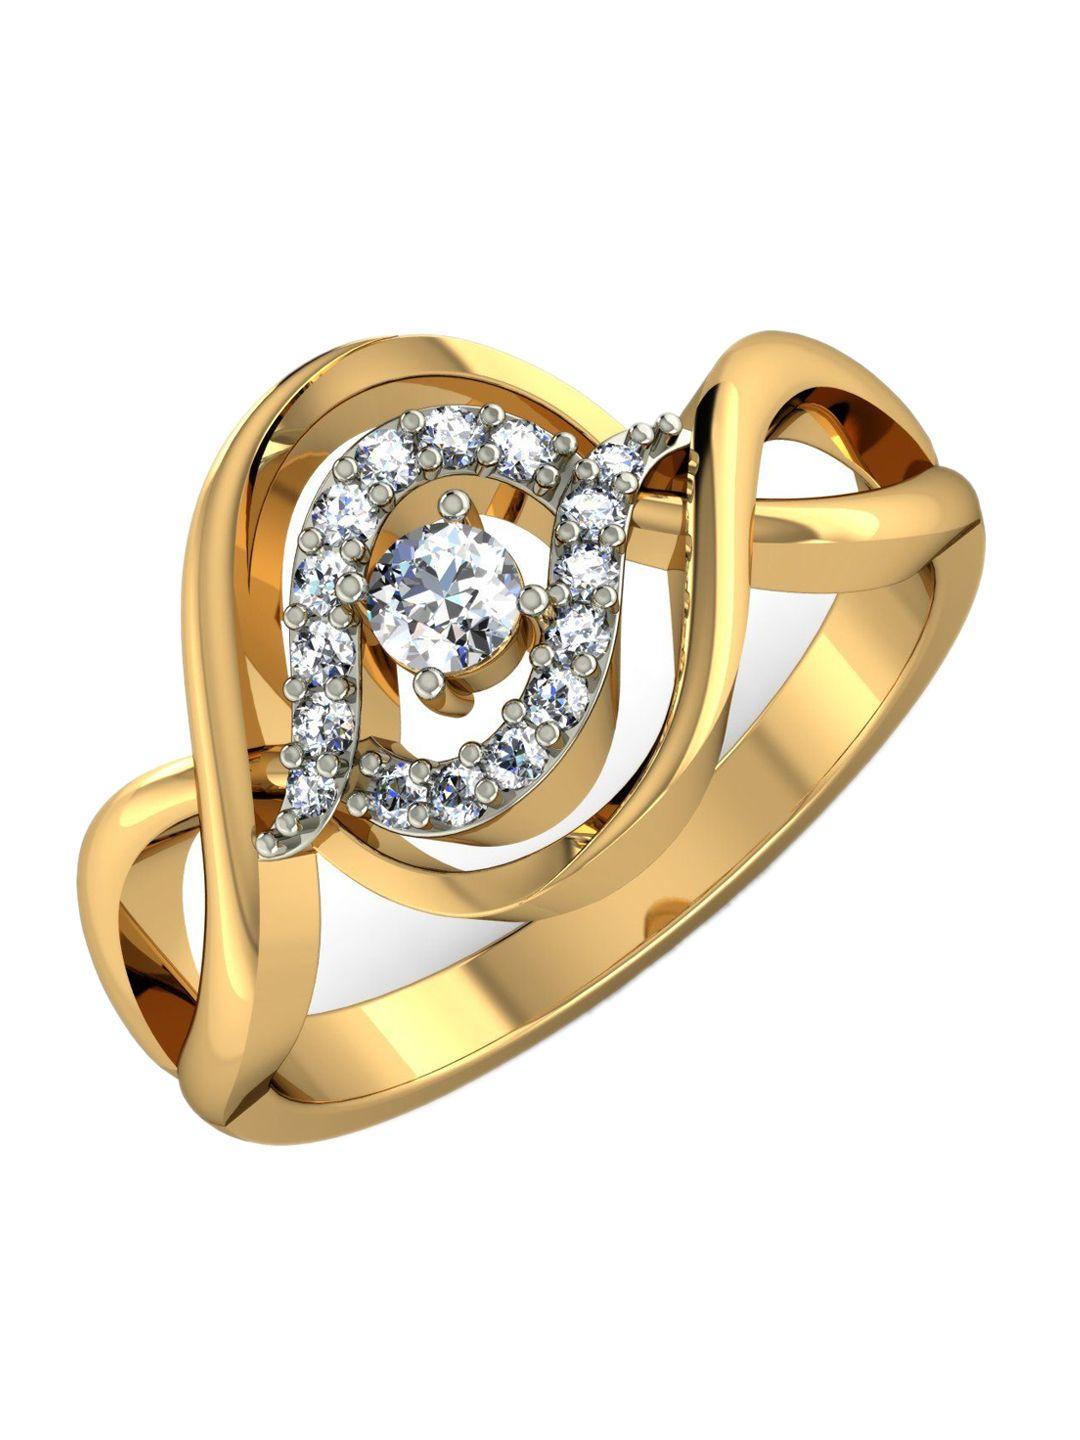 kuberbox aspire 18kt gold diamond-studded ring- 5.1 gm